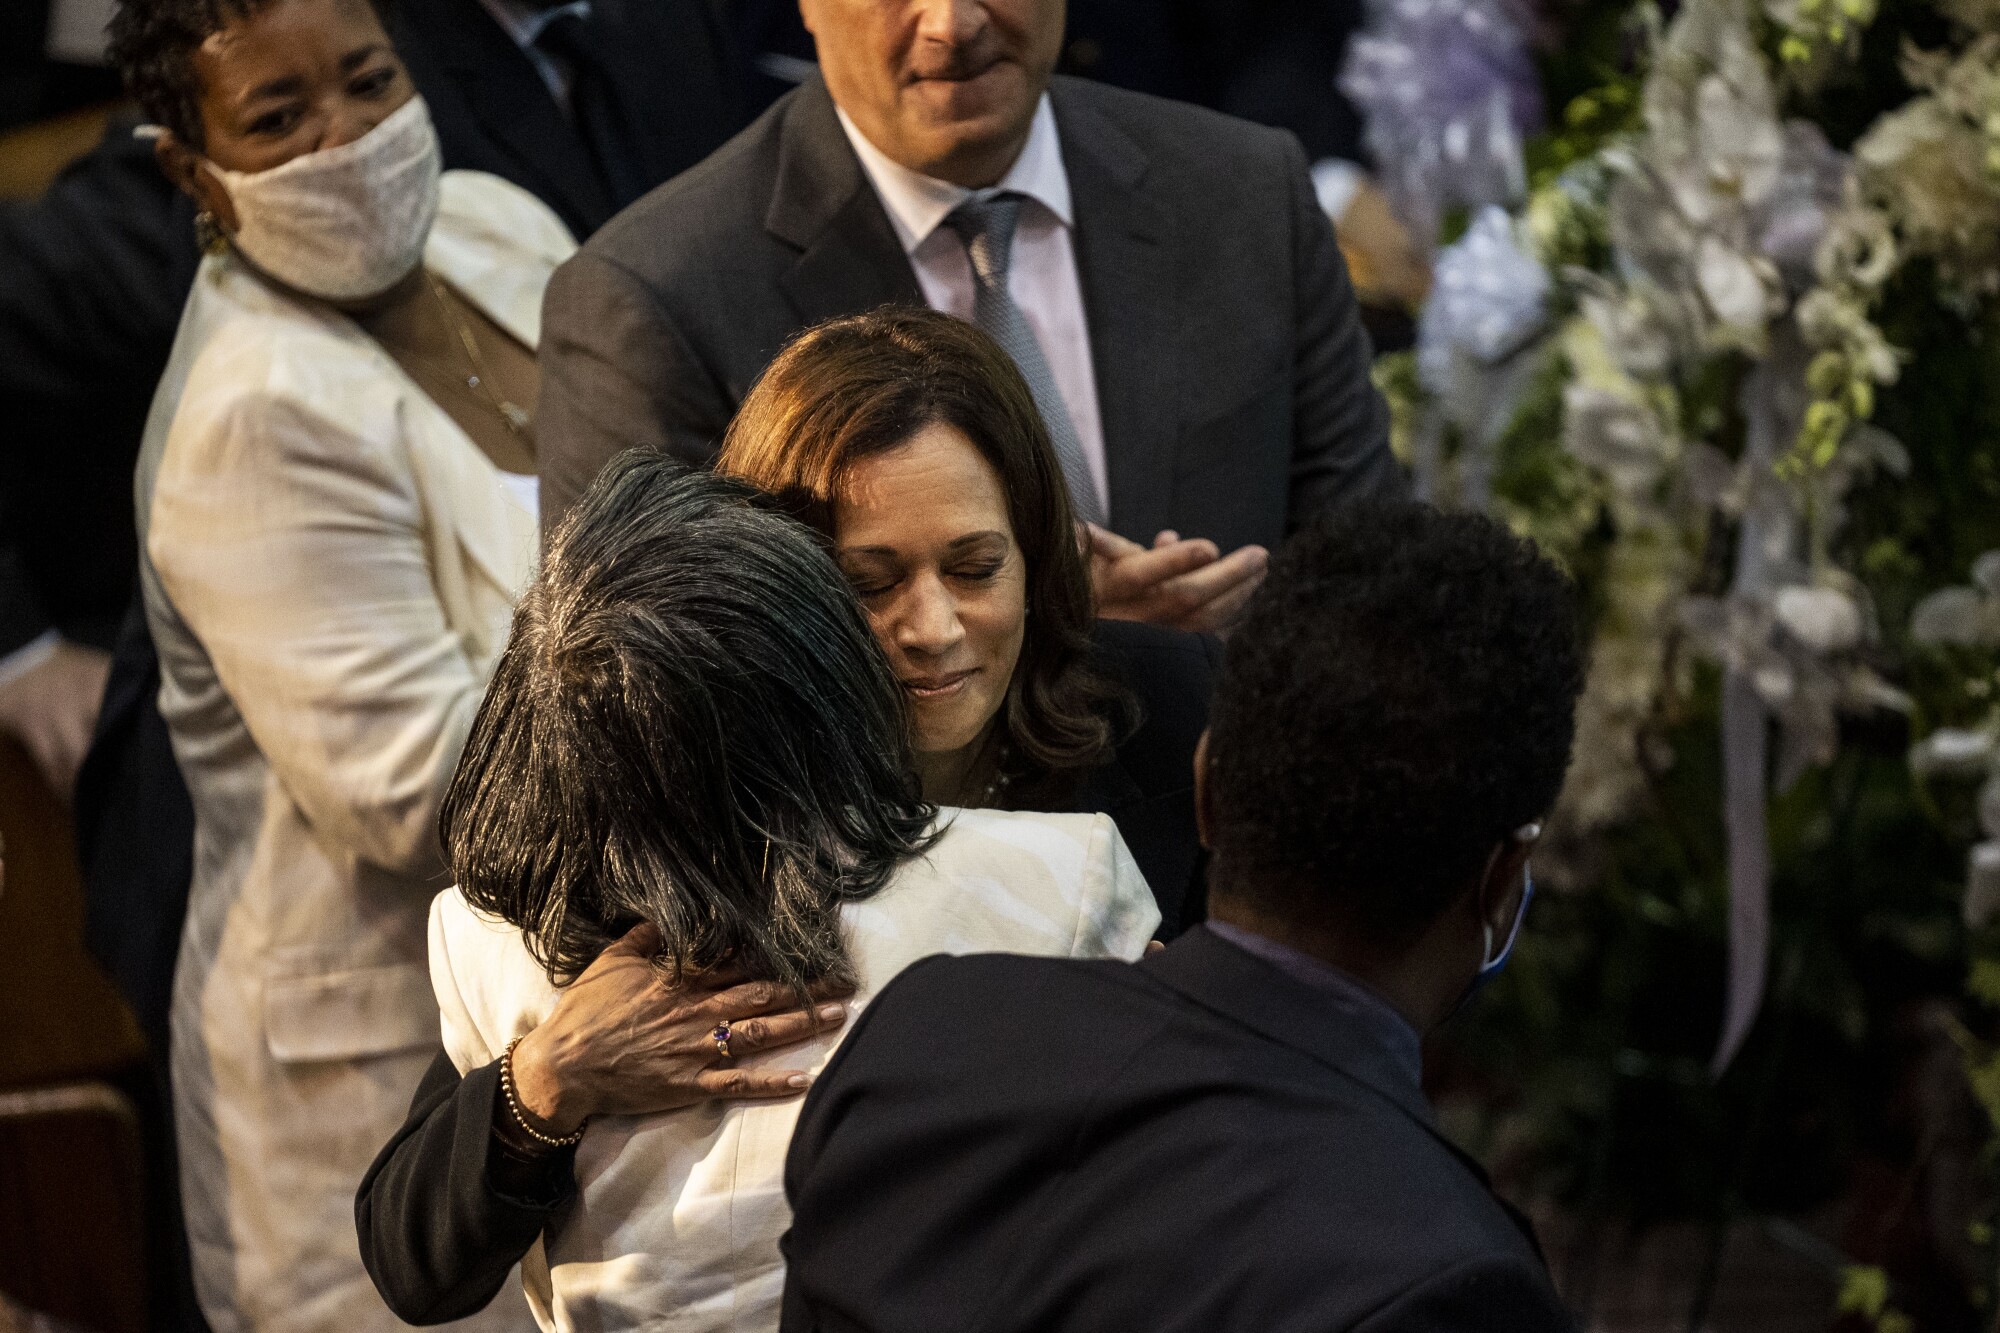 Kamala Harris hugs the woman.